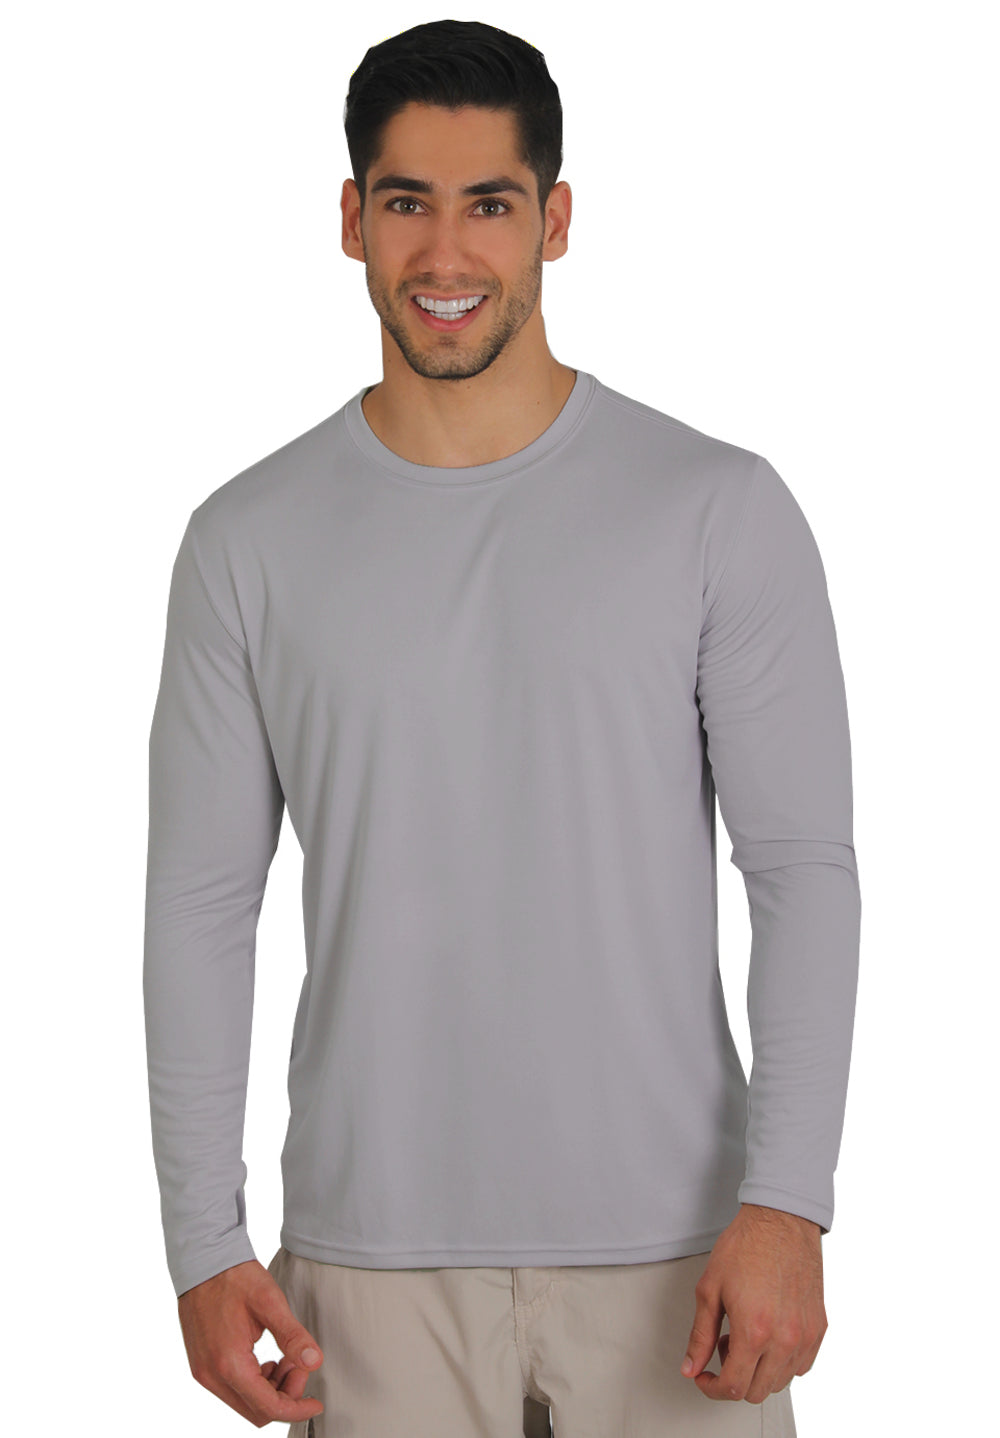 chillBRO by Denali: Mens Long Sleeve Sun Protective Shirt Kingston Grey / Small